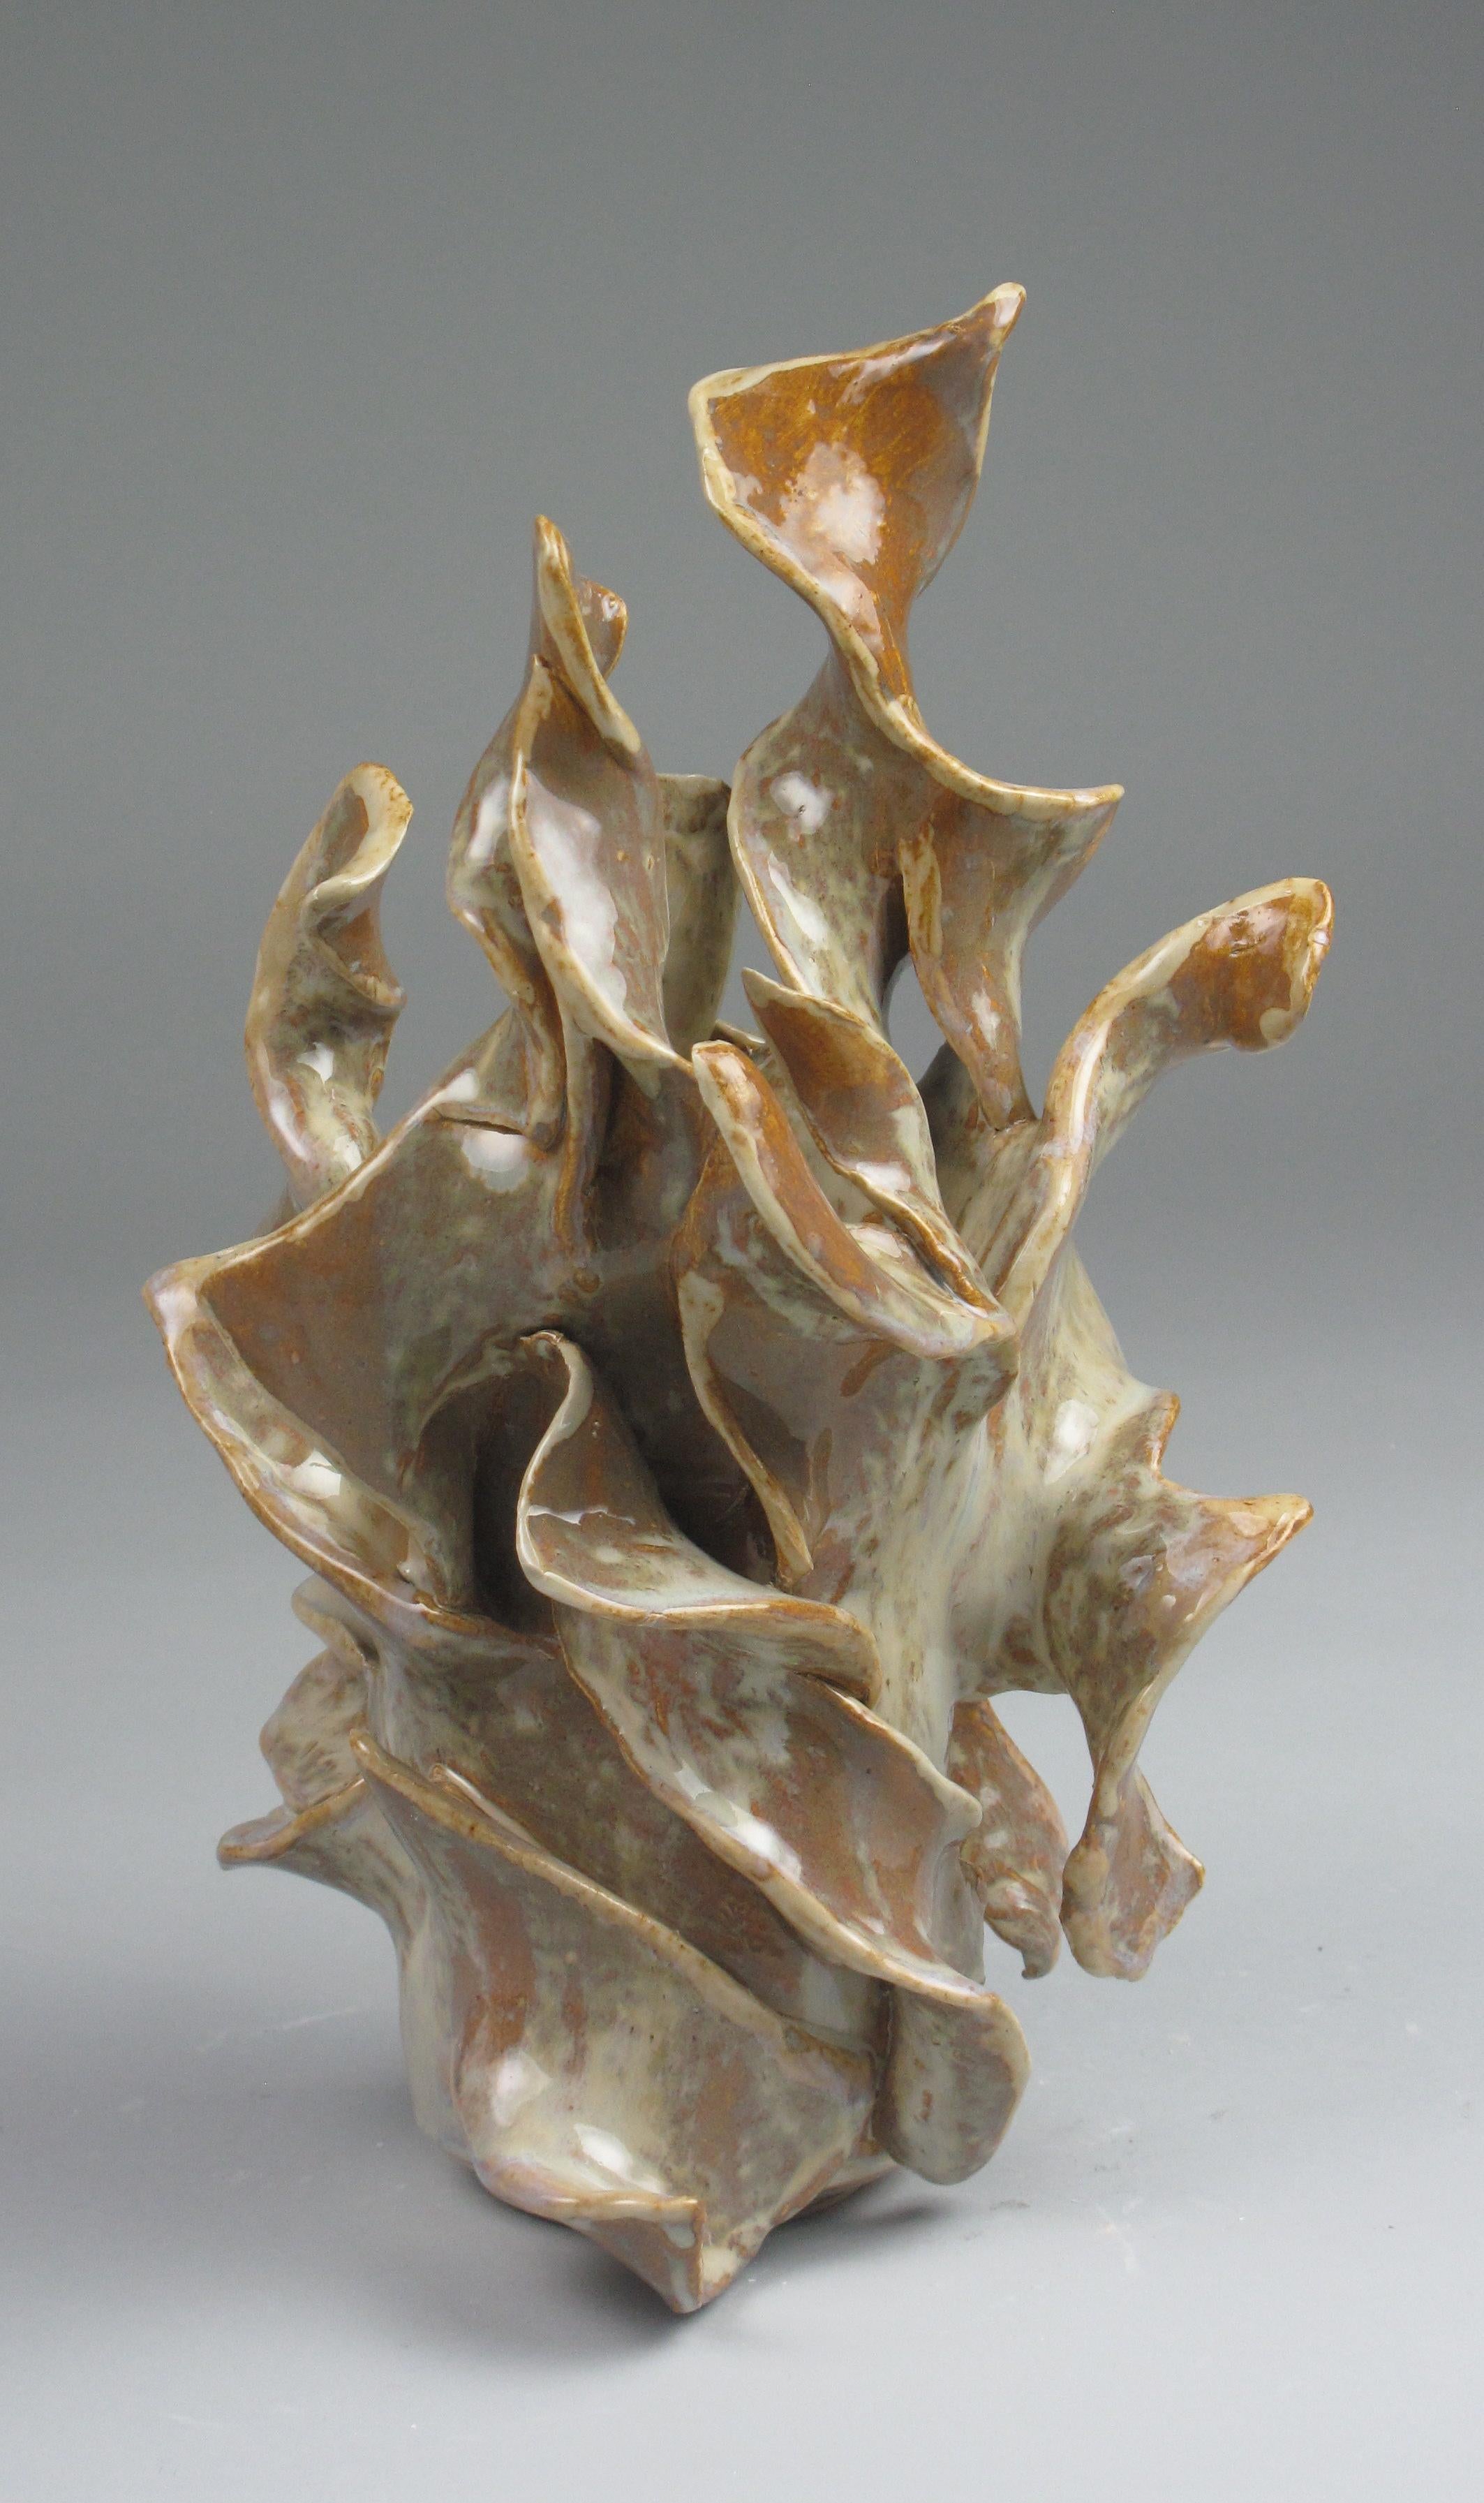 Sara Fine-Wilson Abstract Sculpture - "Tangle Vase", gestural, ceramic, sculpture, white, cream, blue, stoneware